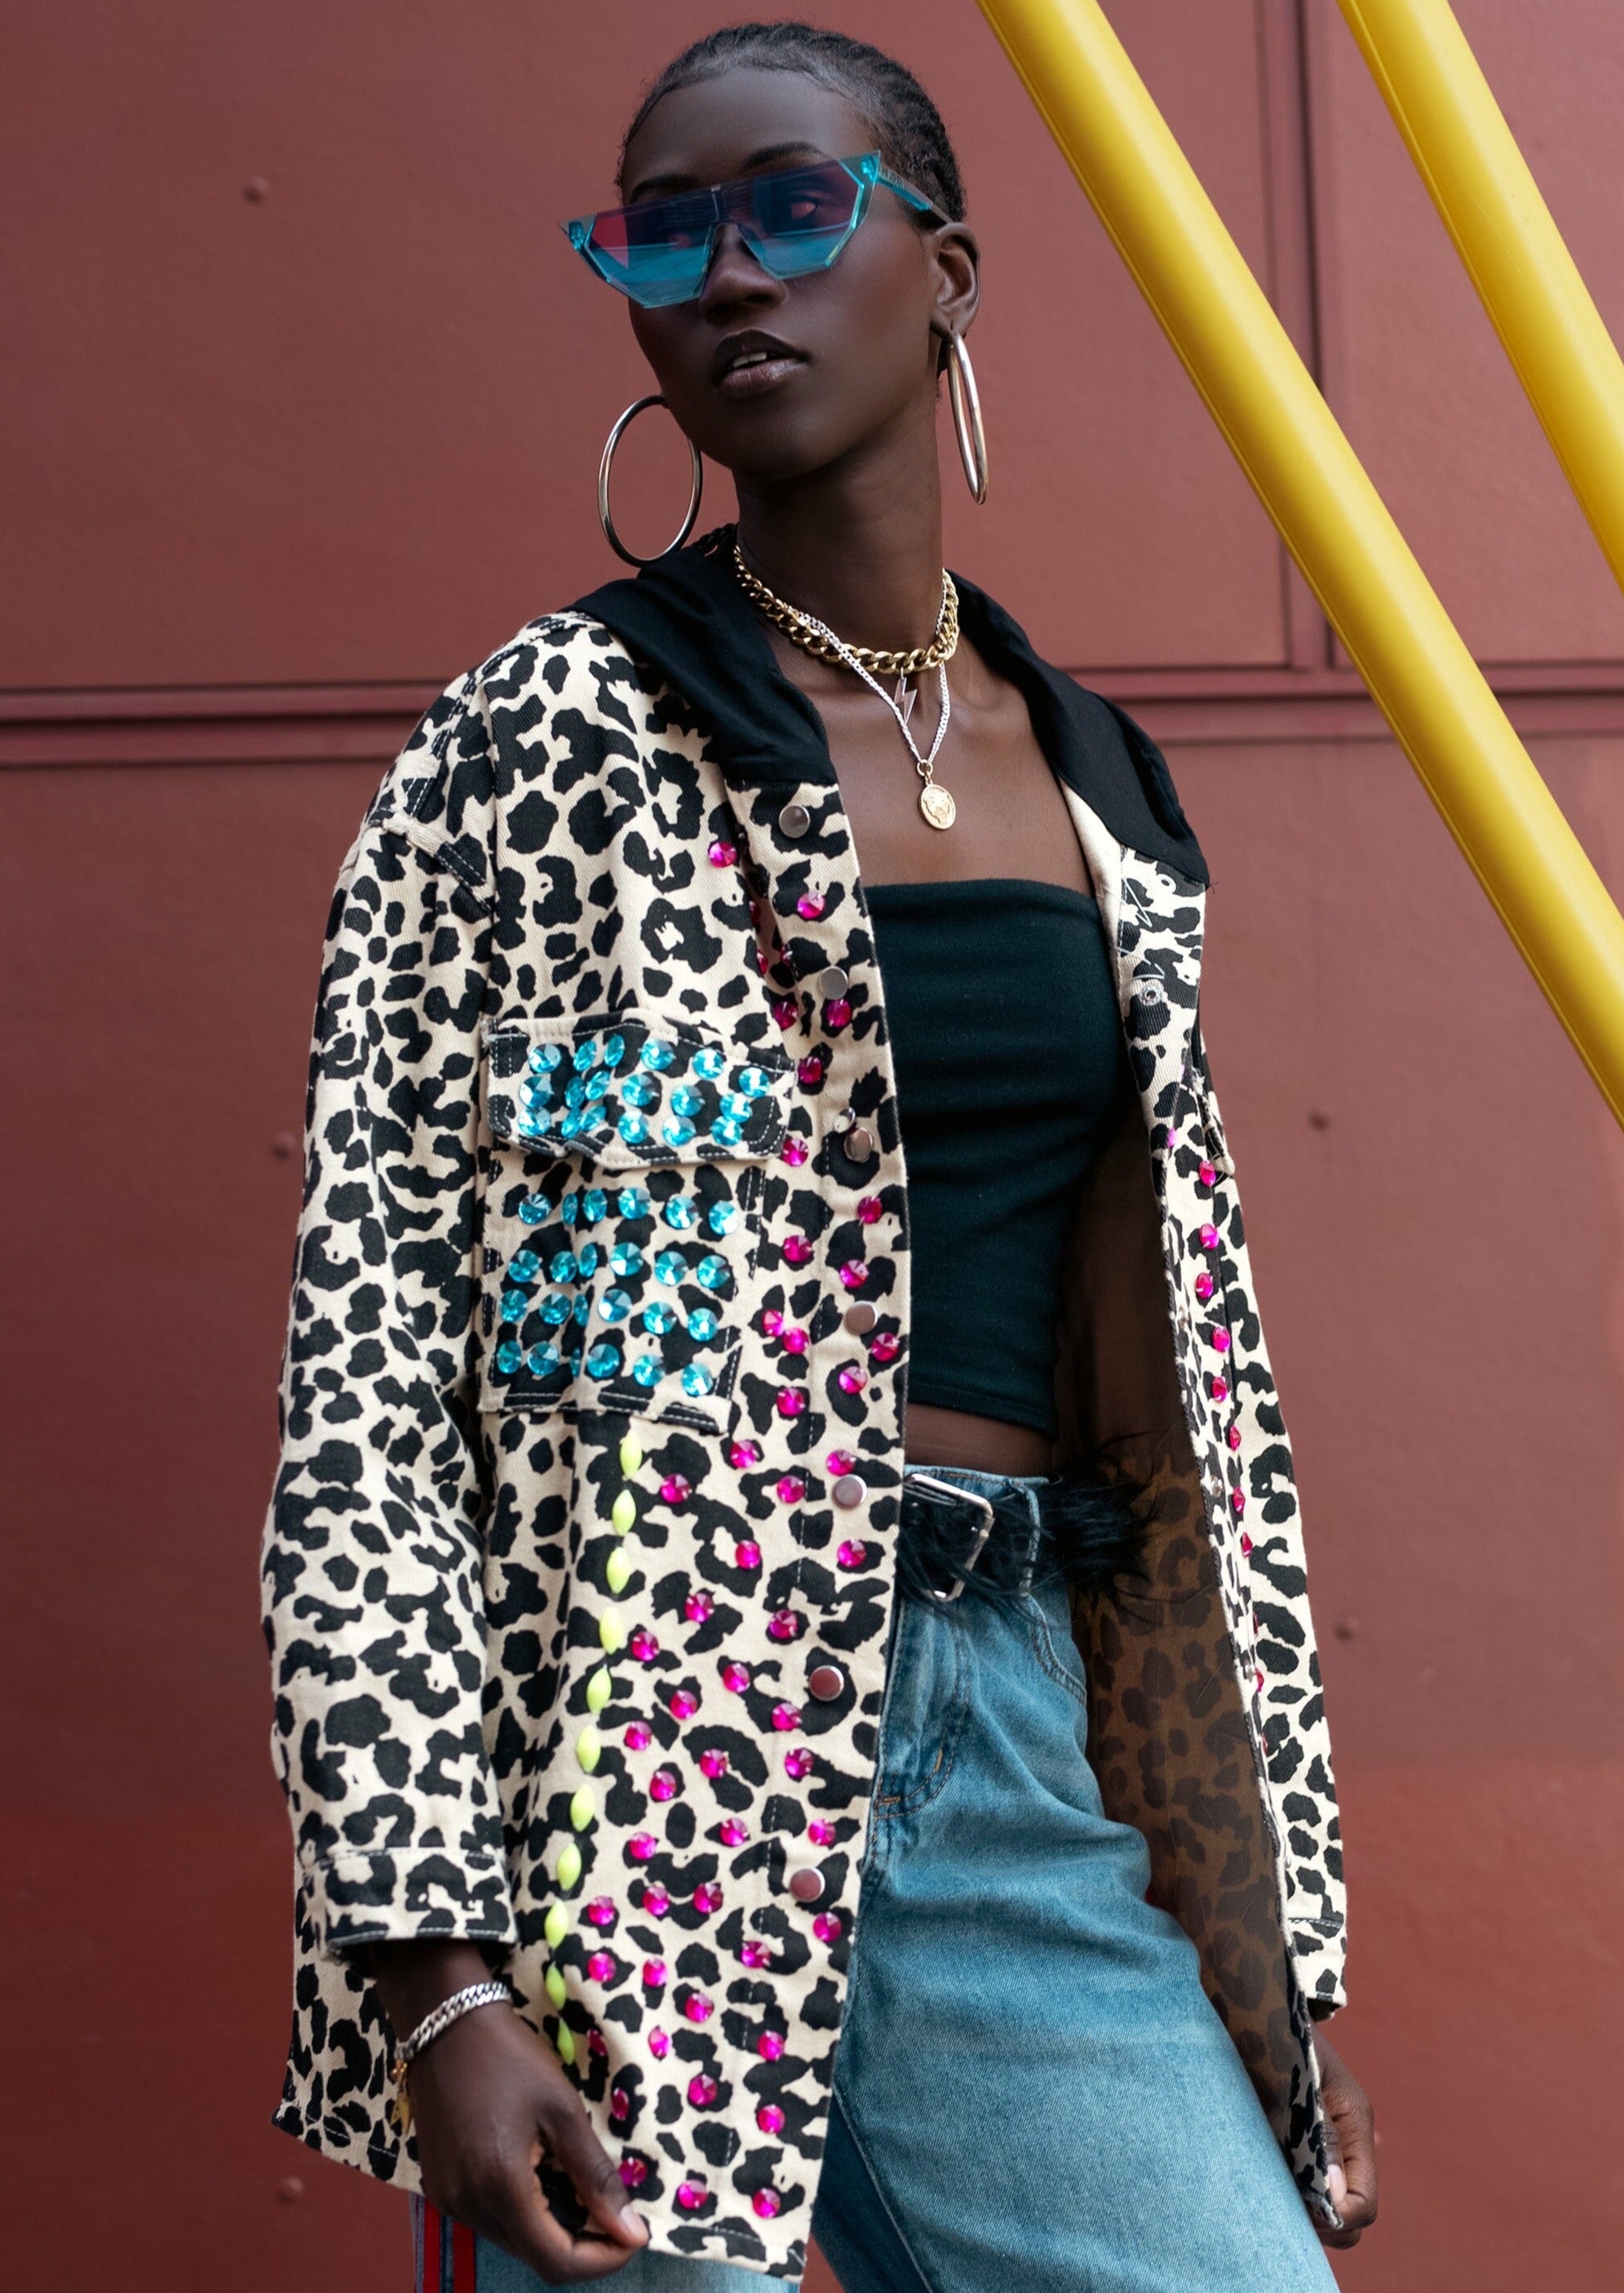 Embellished Leopard Hooded Jacket Outerwear Kate Hewko 